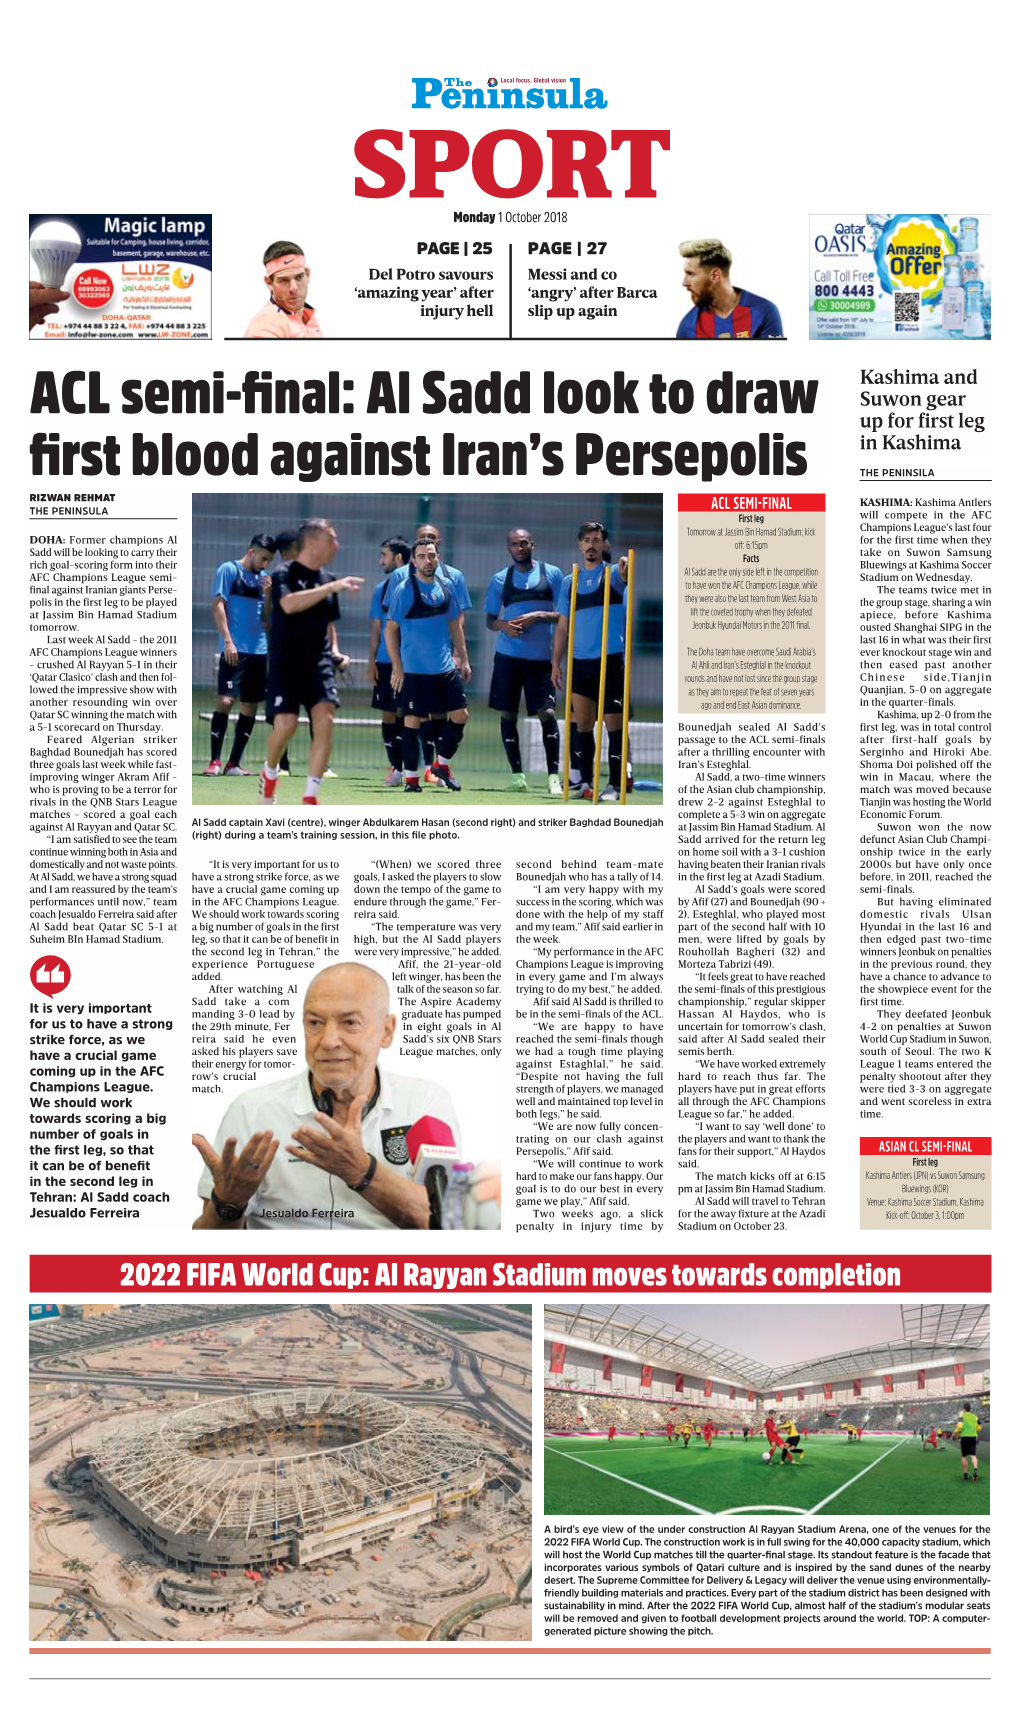 ACL Semi-Final: Al Sadd Look to Draw First Blood Against Iran's Persepolis